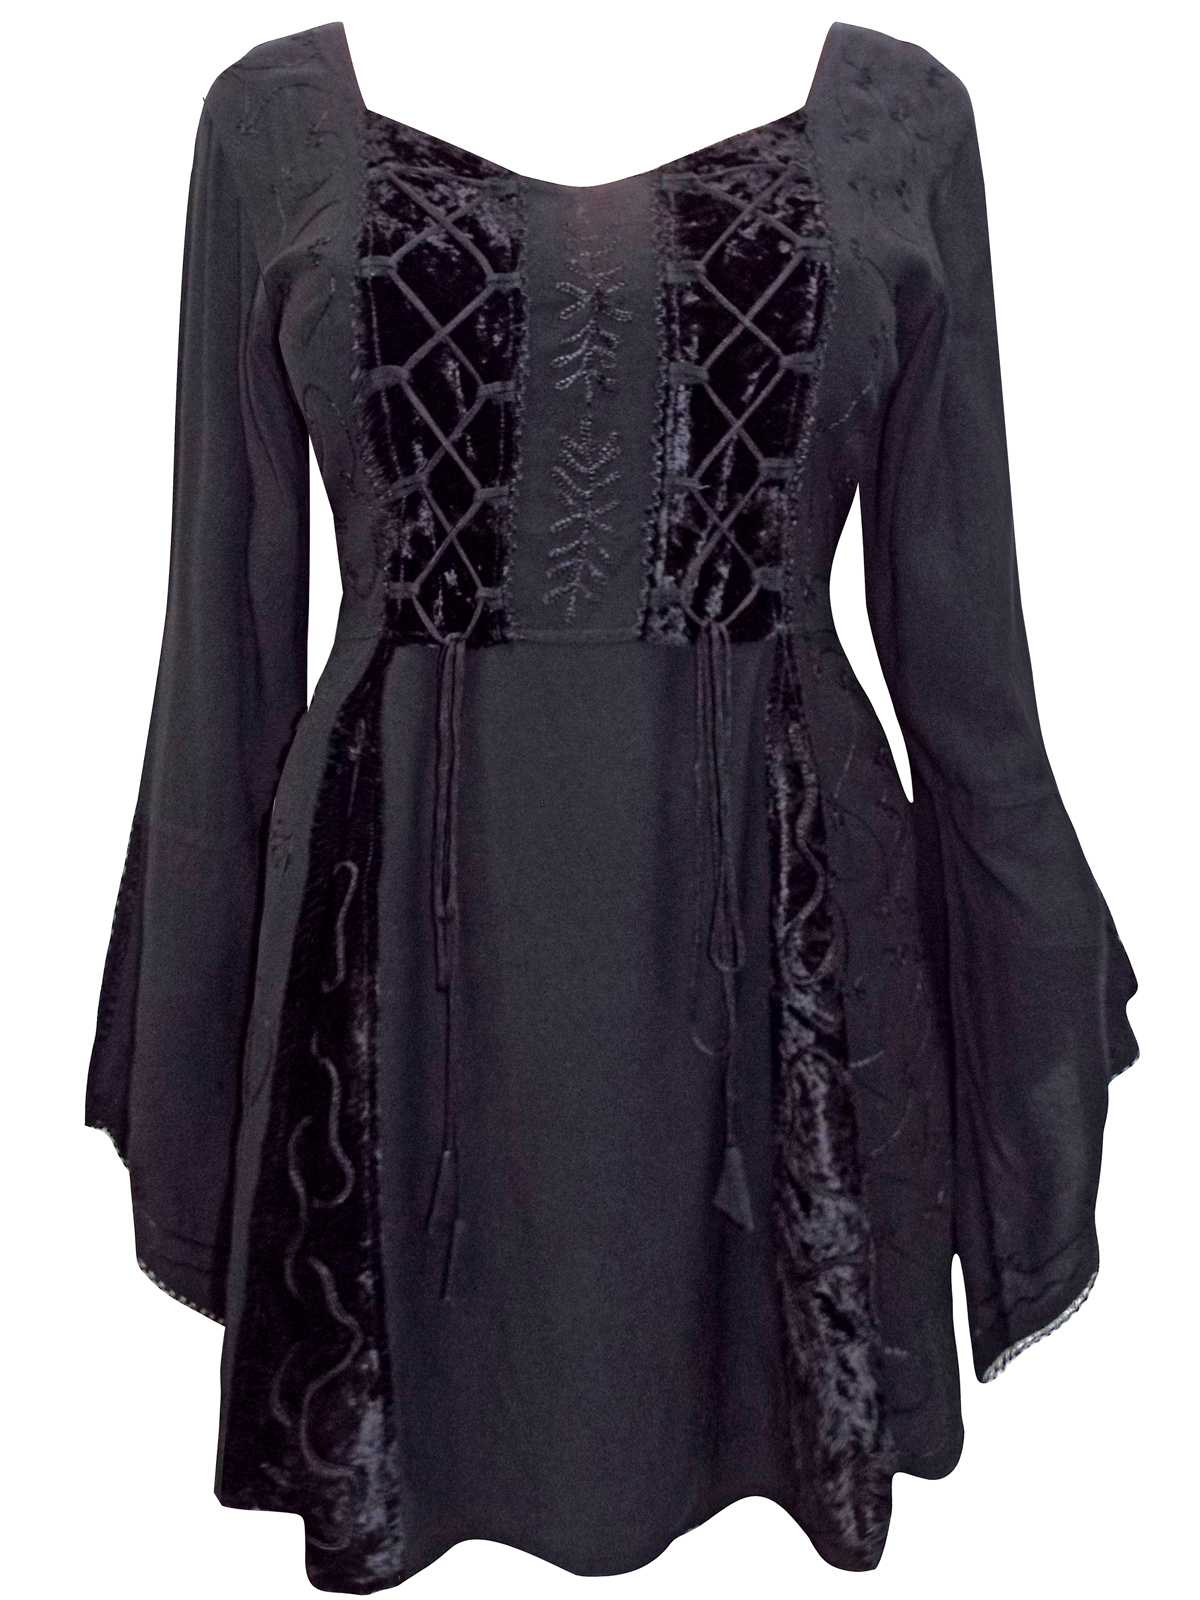 eaonplus BLACK Embroidered Renaissance Gothic Corset Tunic Top - Plus